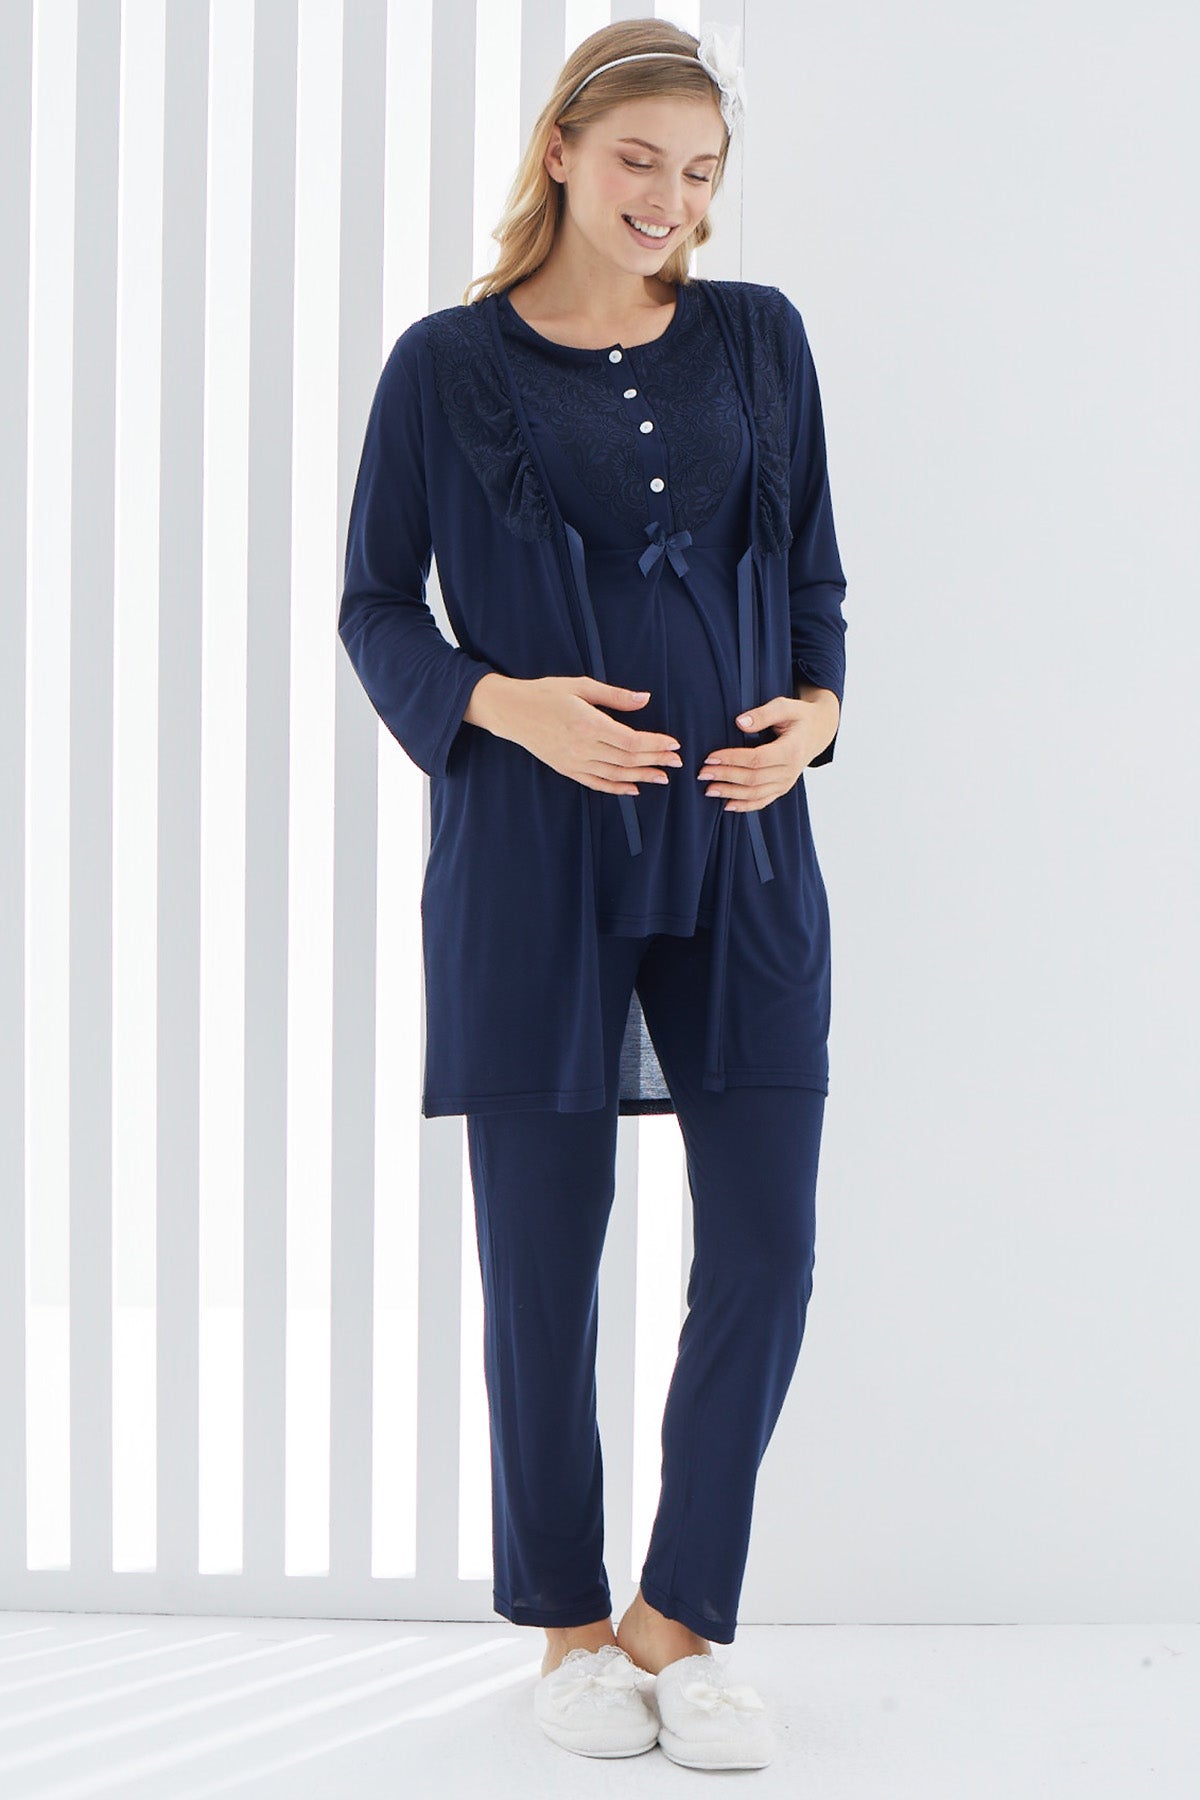 Guipure 3-Pieces Maternity & Nursing Pajamas With Lace Collar Robe Navy Blue - 3403